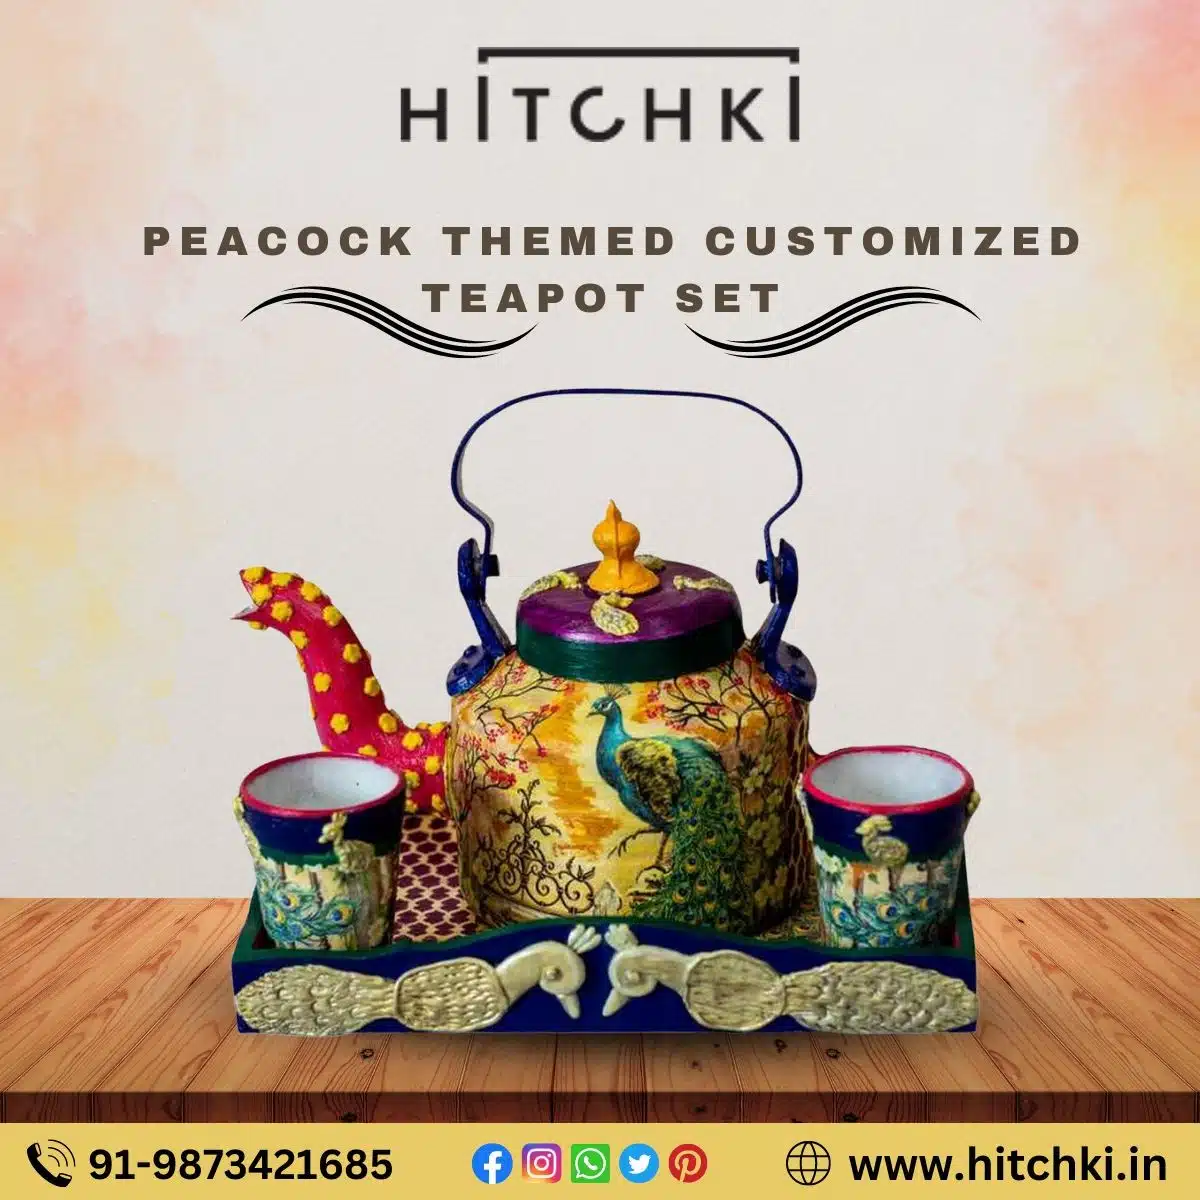 Peacock Themed Customized Teapot Set From Hitchki